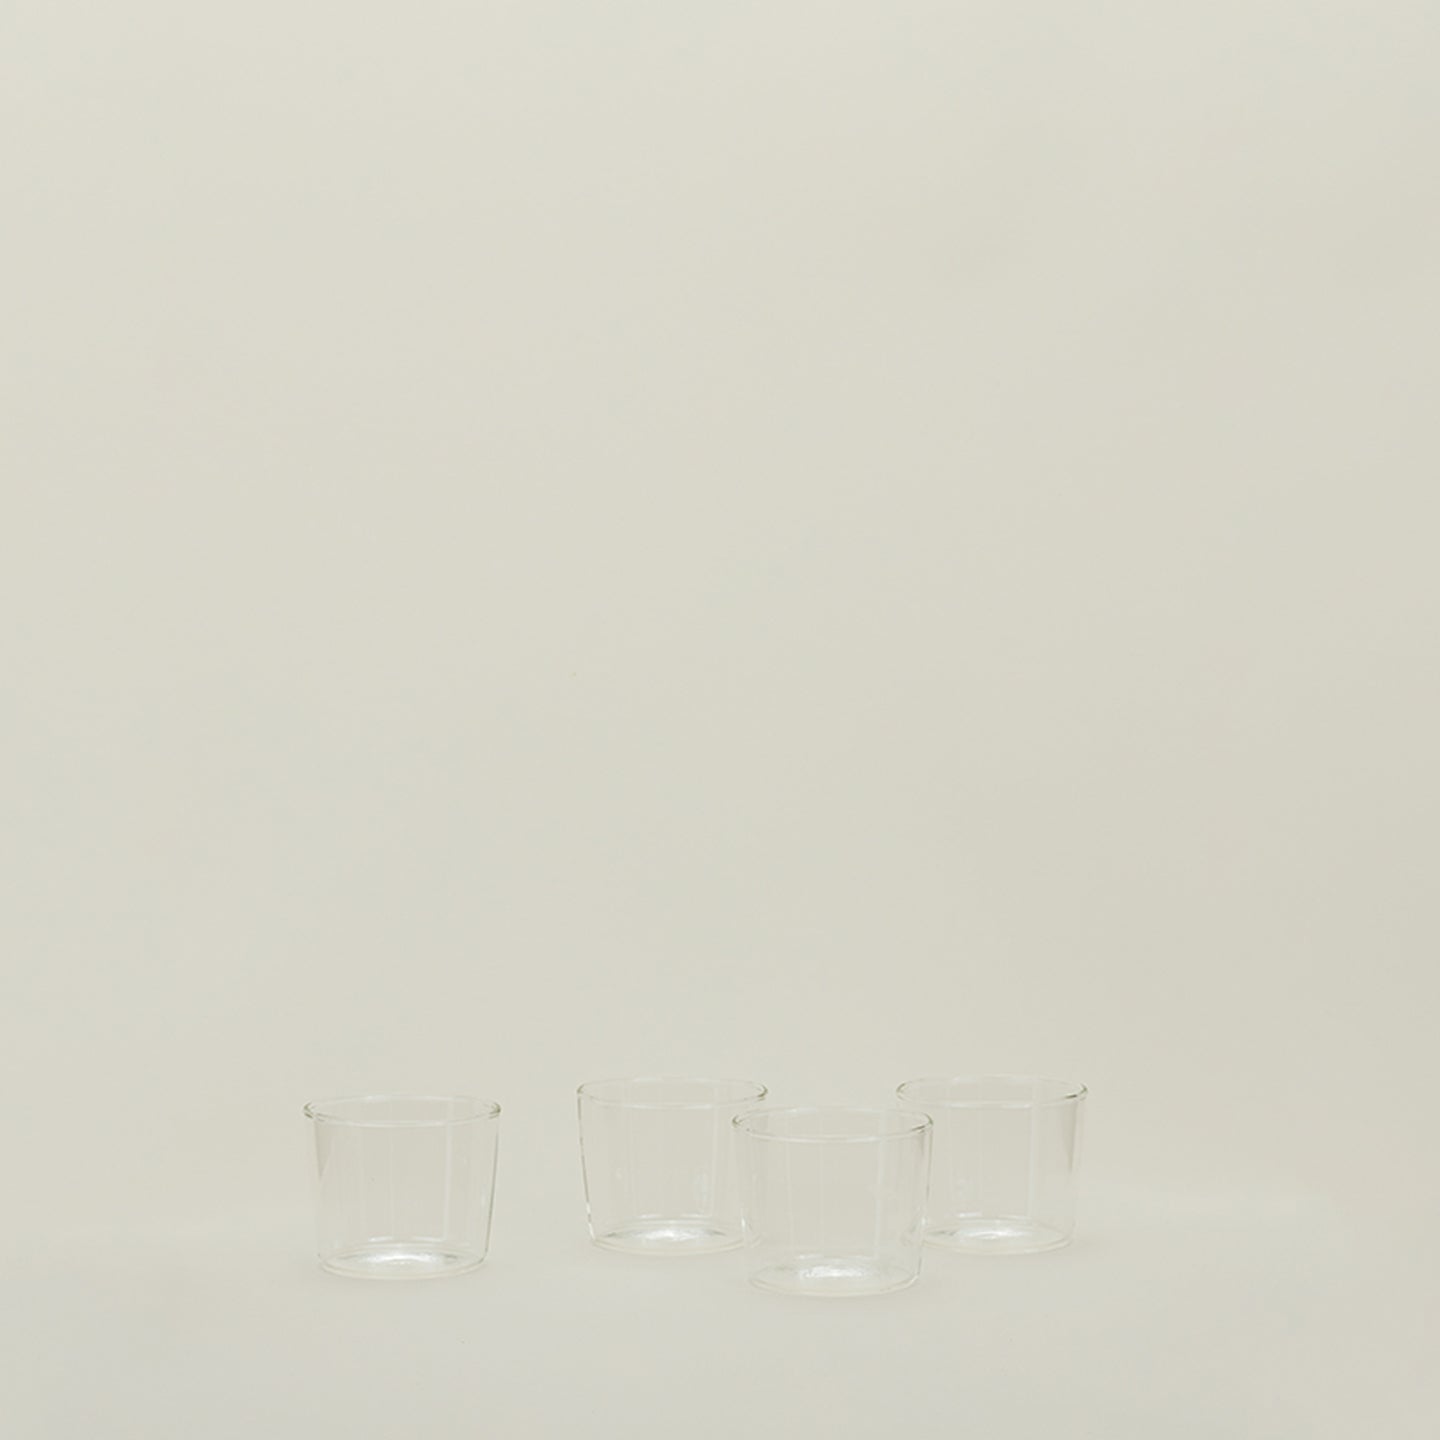 Minimalist arrangement of empty glass cups on neutral background.